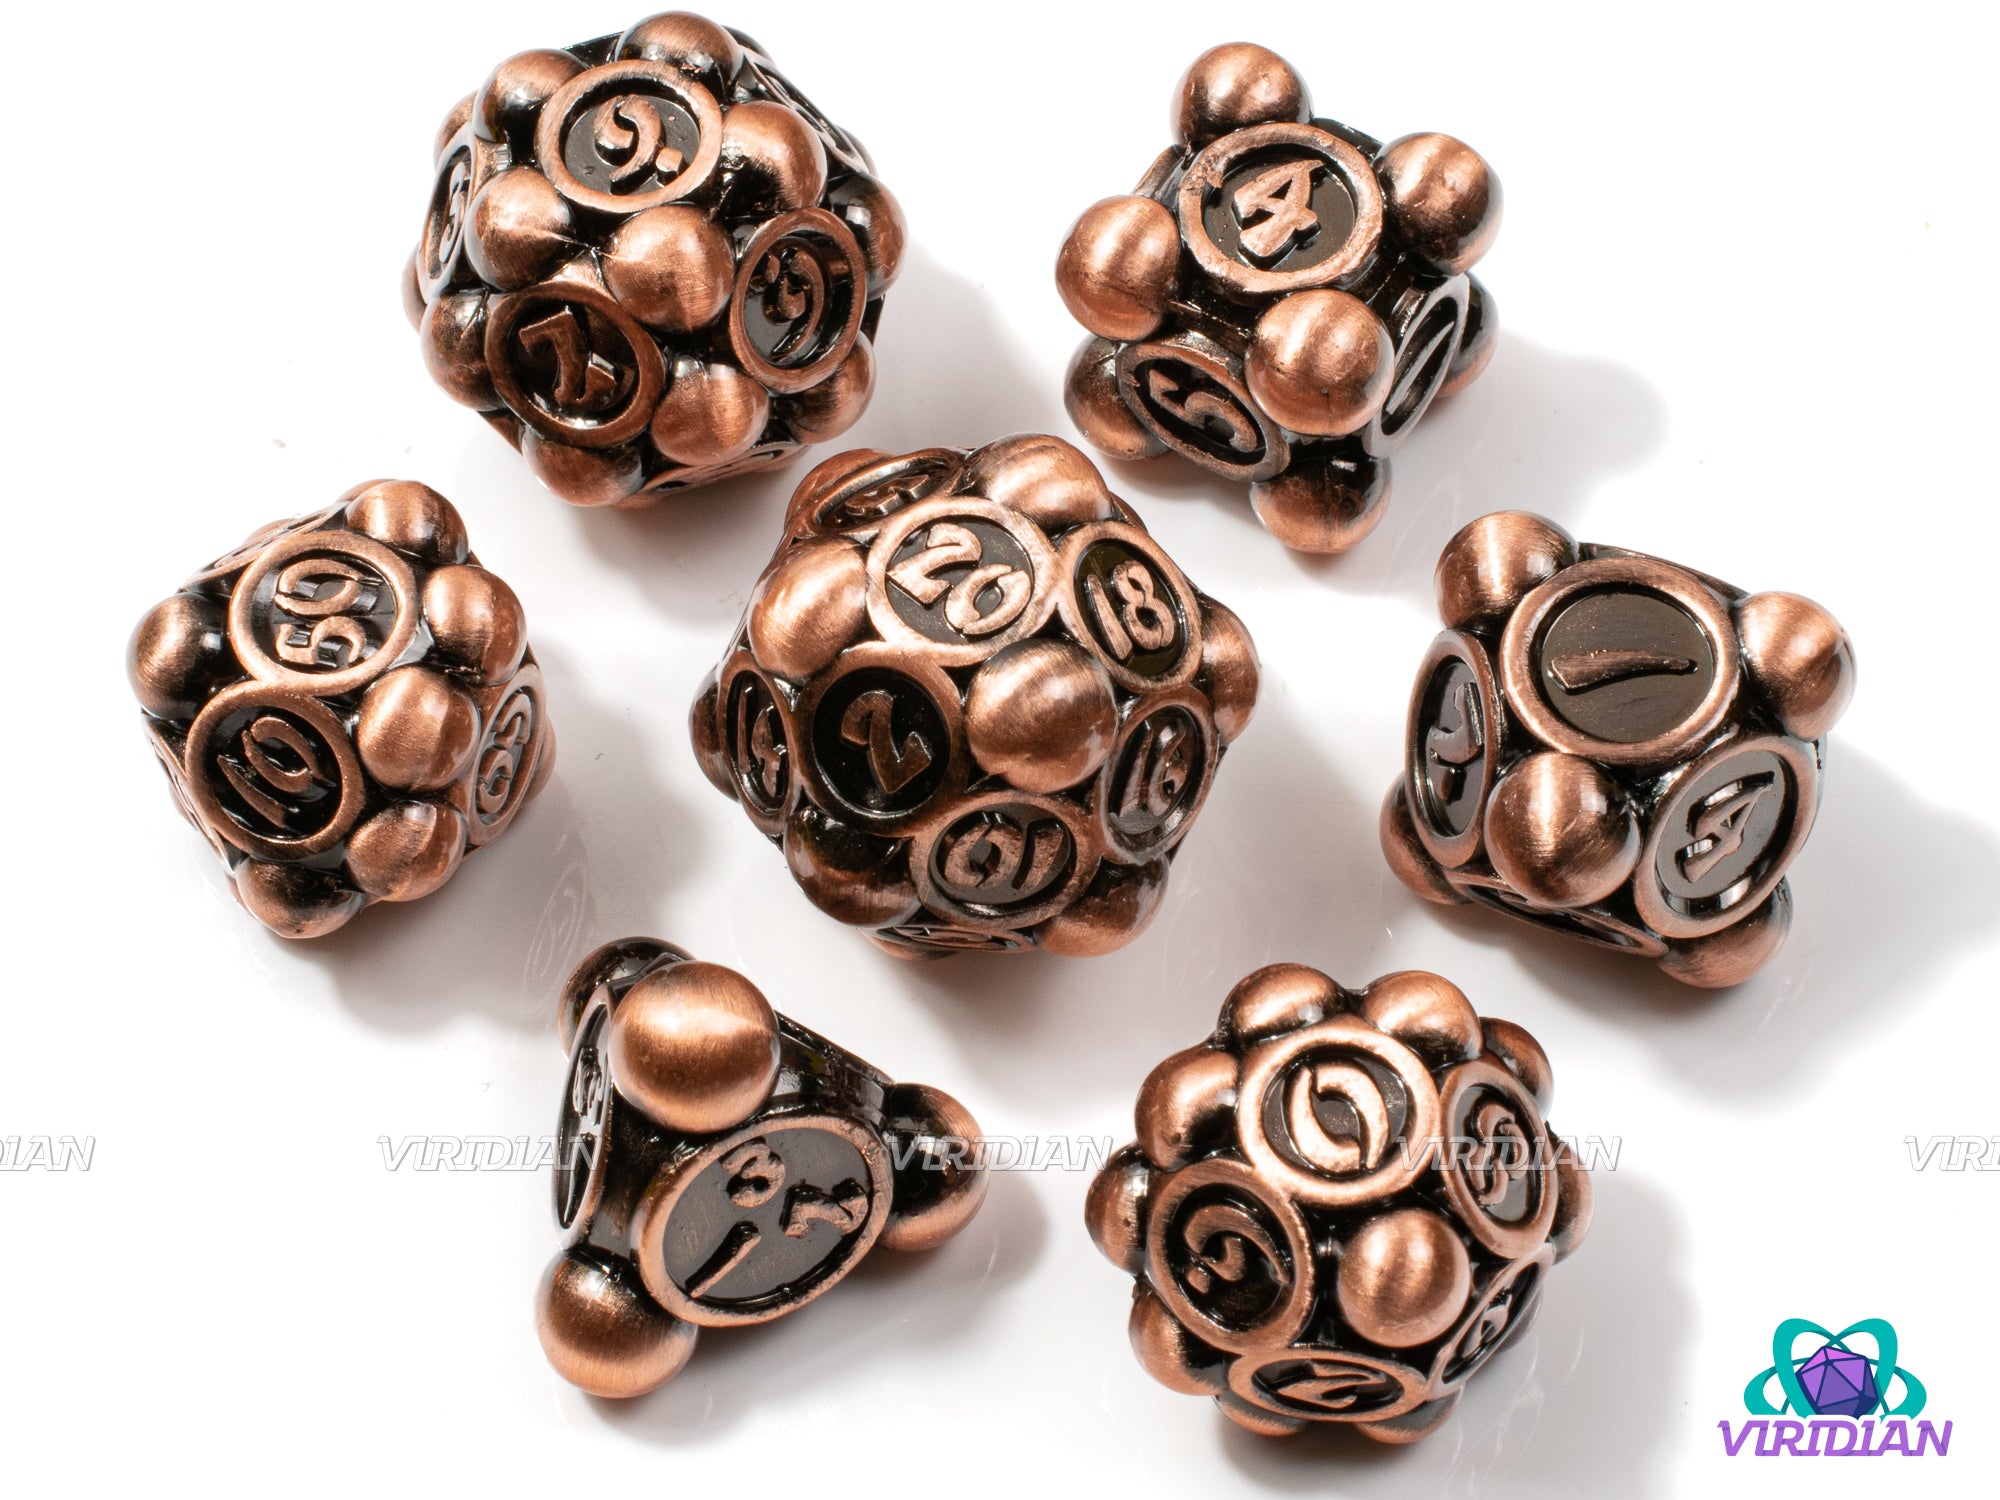 Copper Bearings | Large Ball/Sphere Ornate Design, Red-Orange Gold Colored | Metal Dice Set (7)